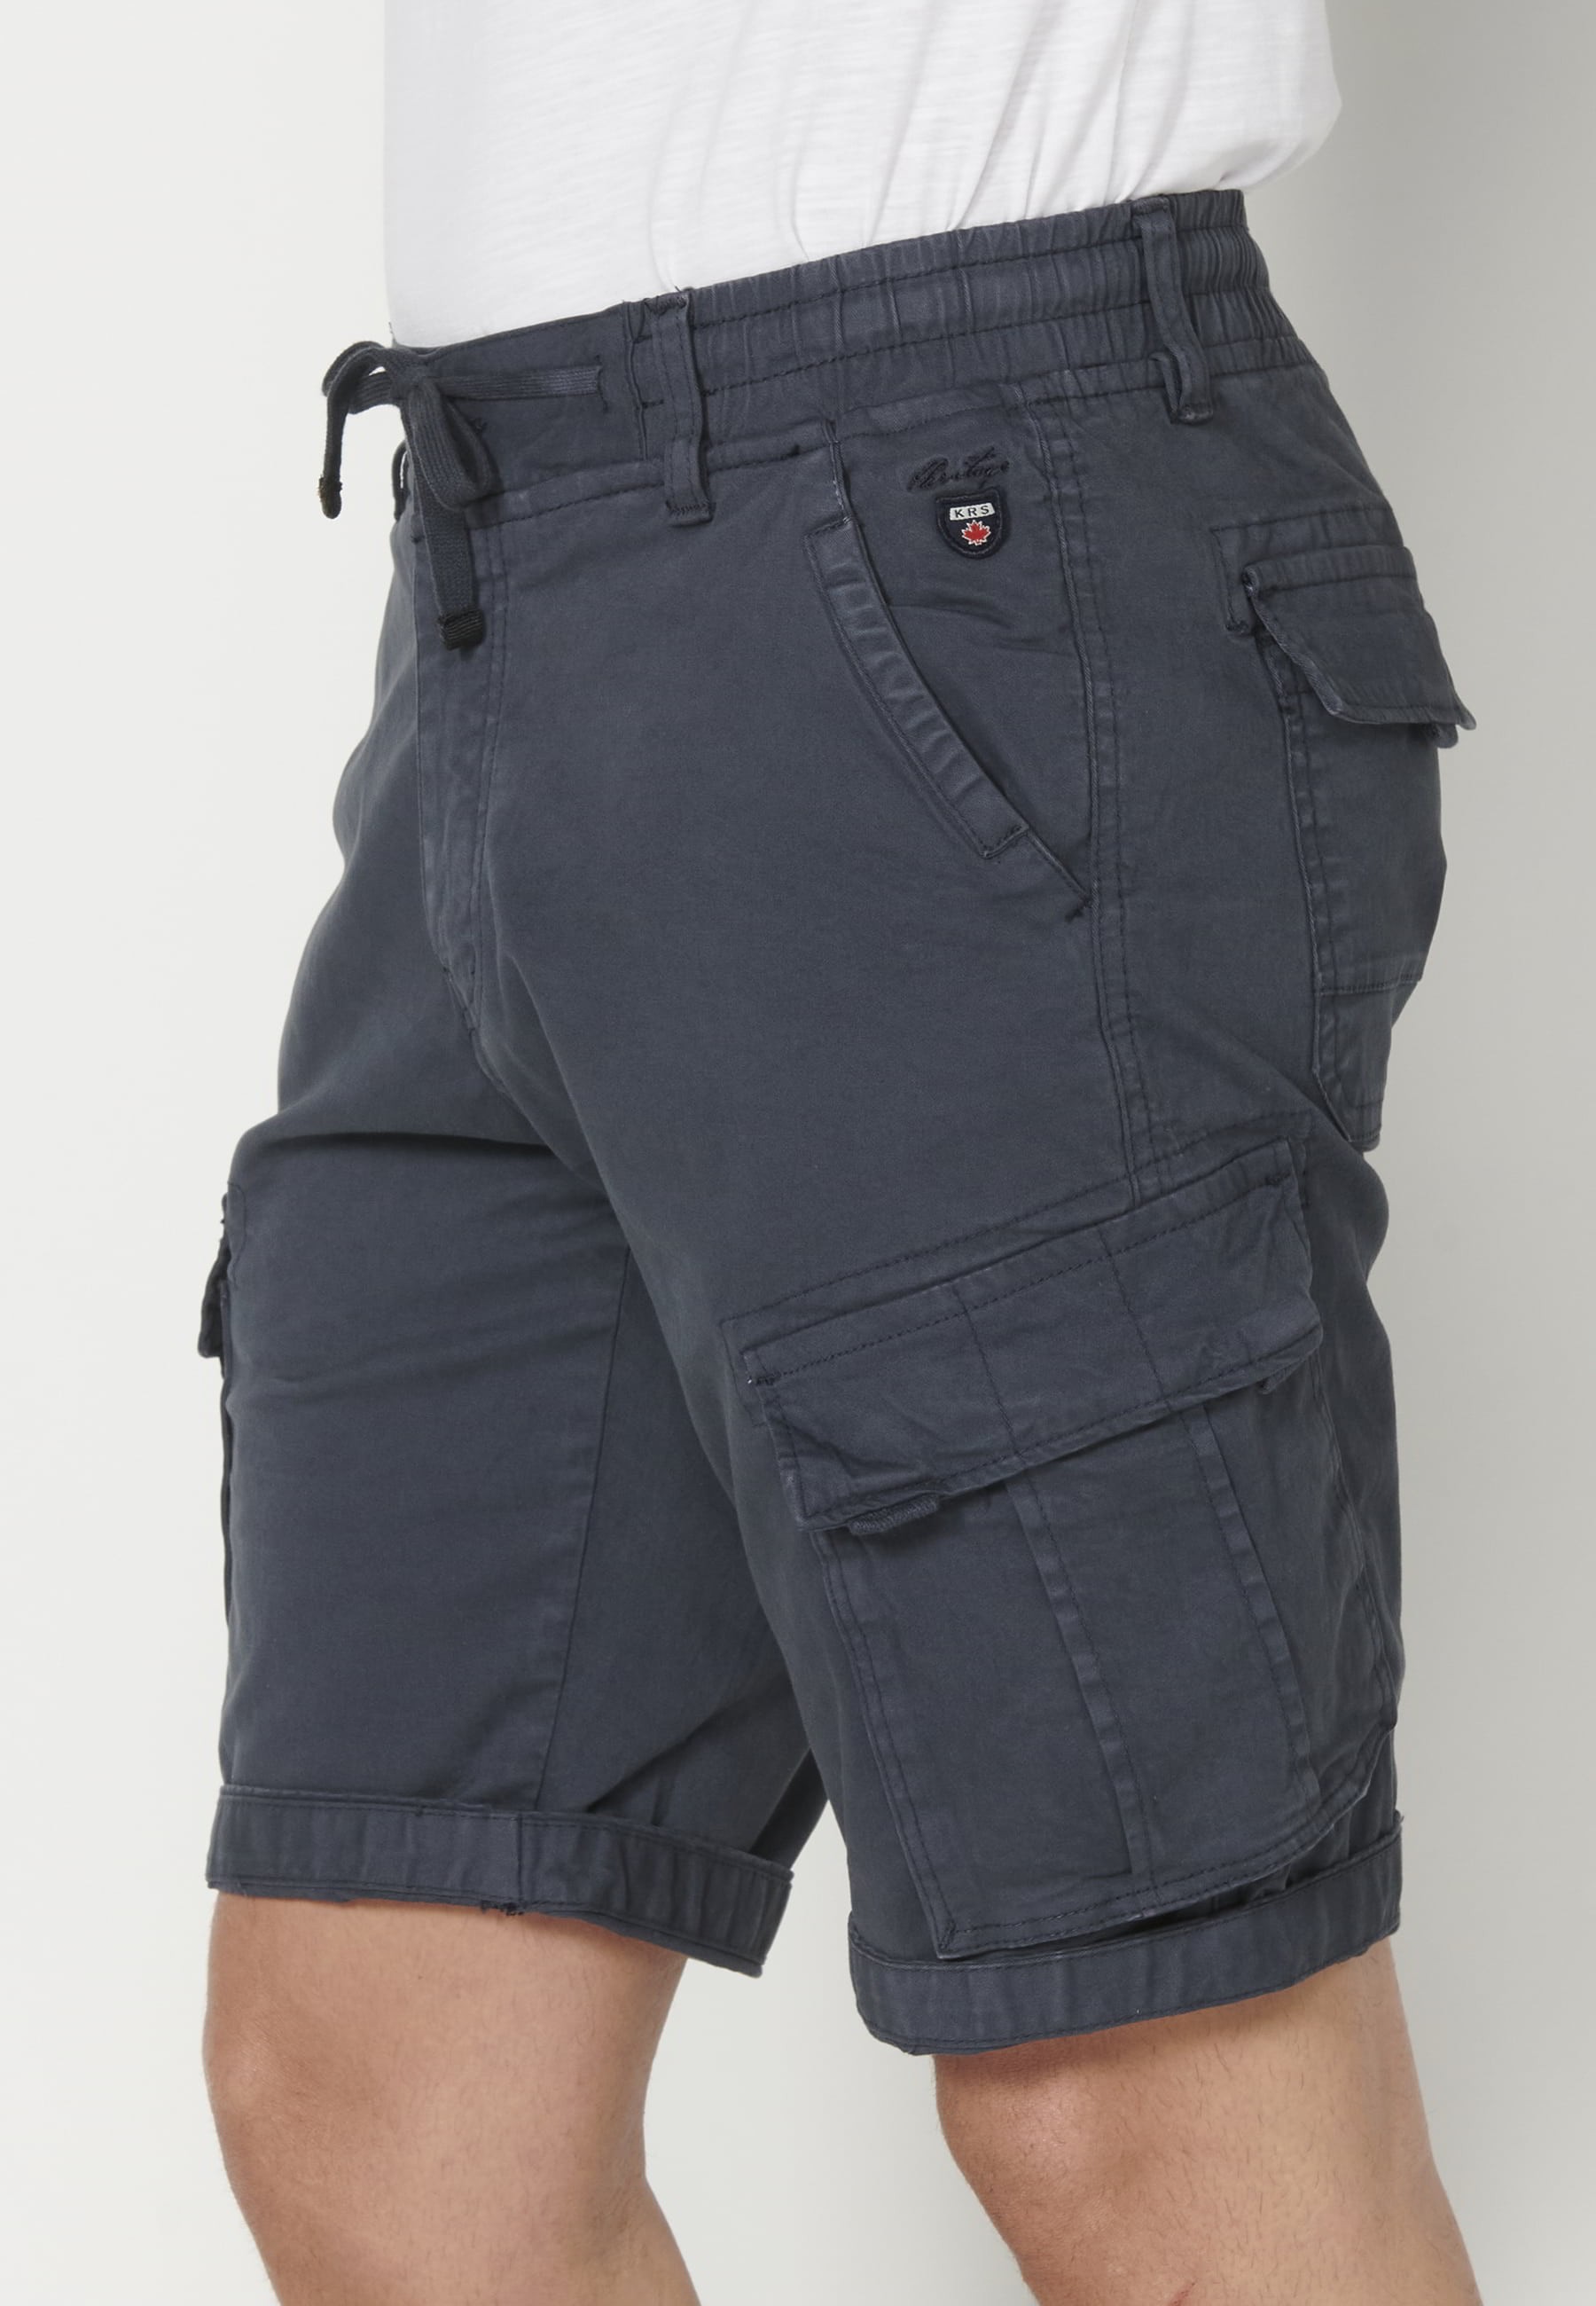 Bermuda cargo shorts in Navy color for Men